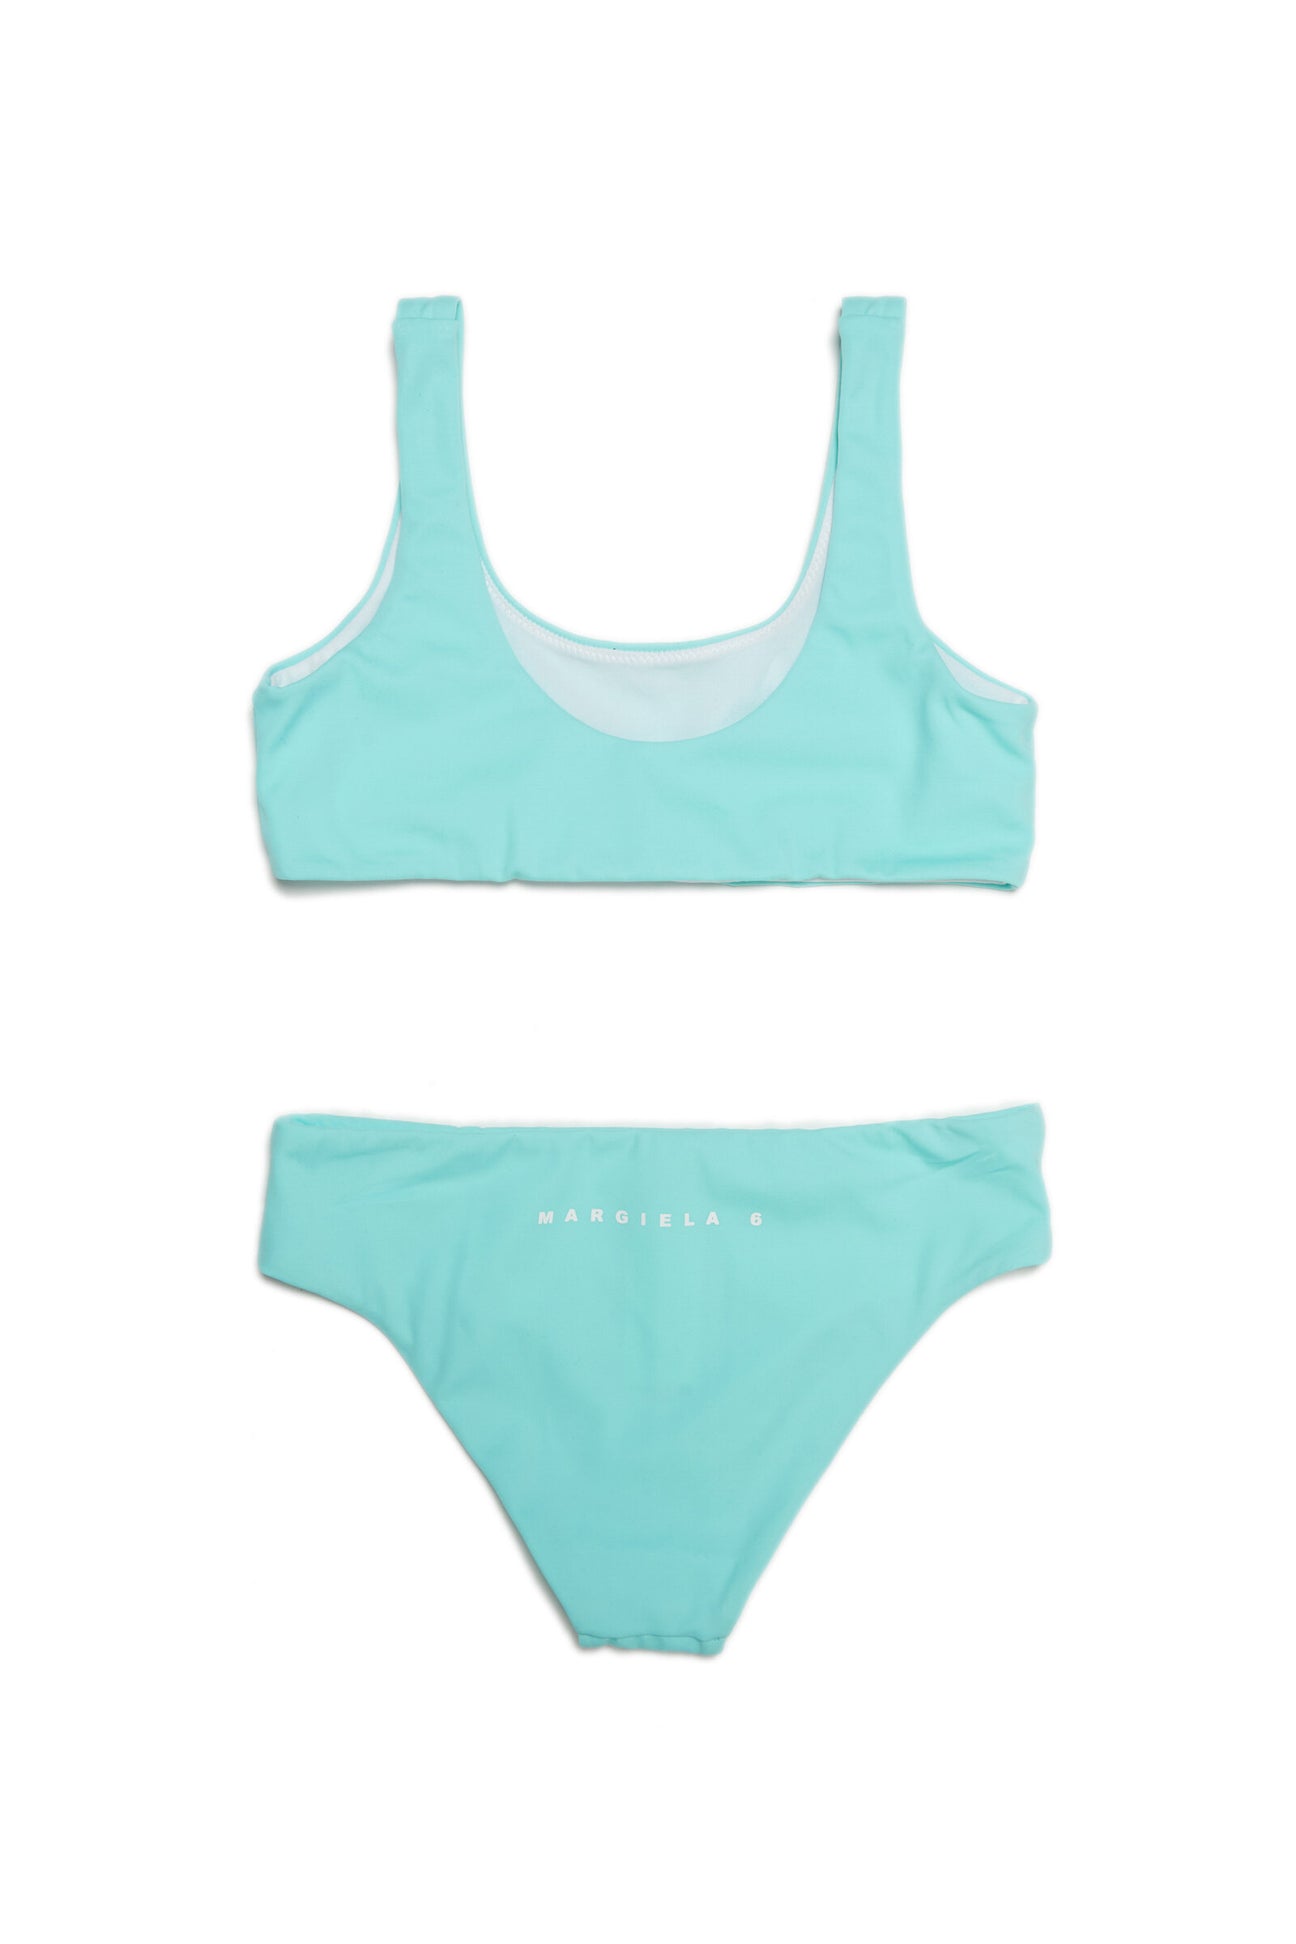 Aquamarine sporty bikini swimming costume with minimal logo Aquamarine sporty bikini swimming costume with minimal logo